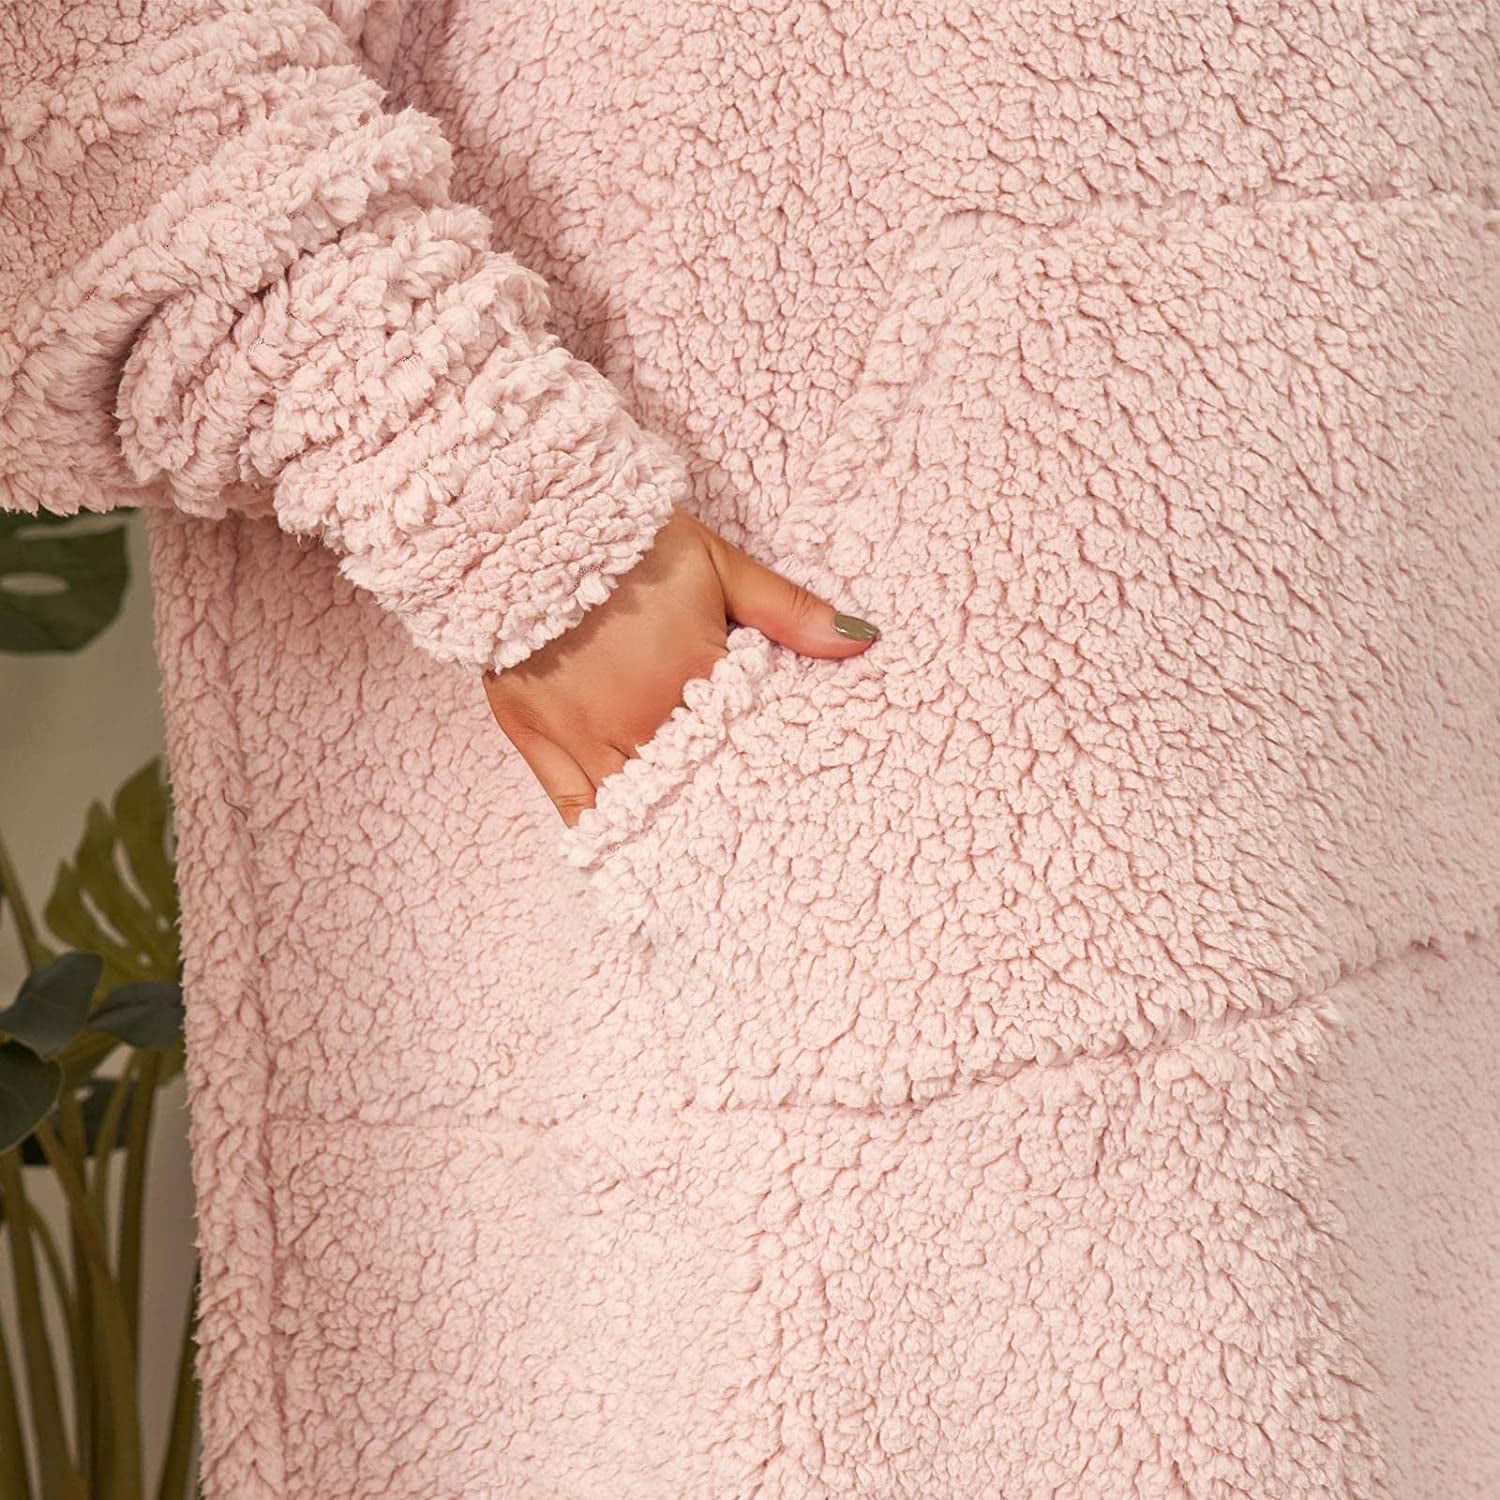 Brentfords Extra Long Teddy Fleece Blanket Hoodie Oversized for Women Men  Adult Wearable Throw Soft …See more Brentfords Extra Long Teddy Fleece